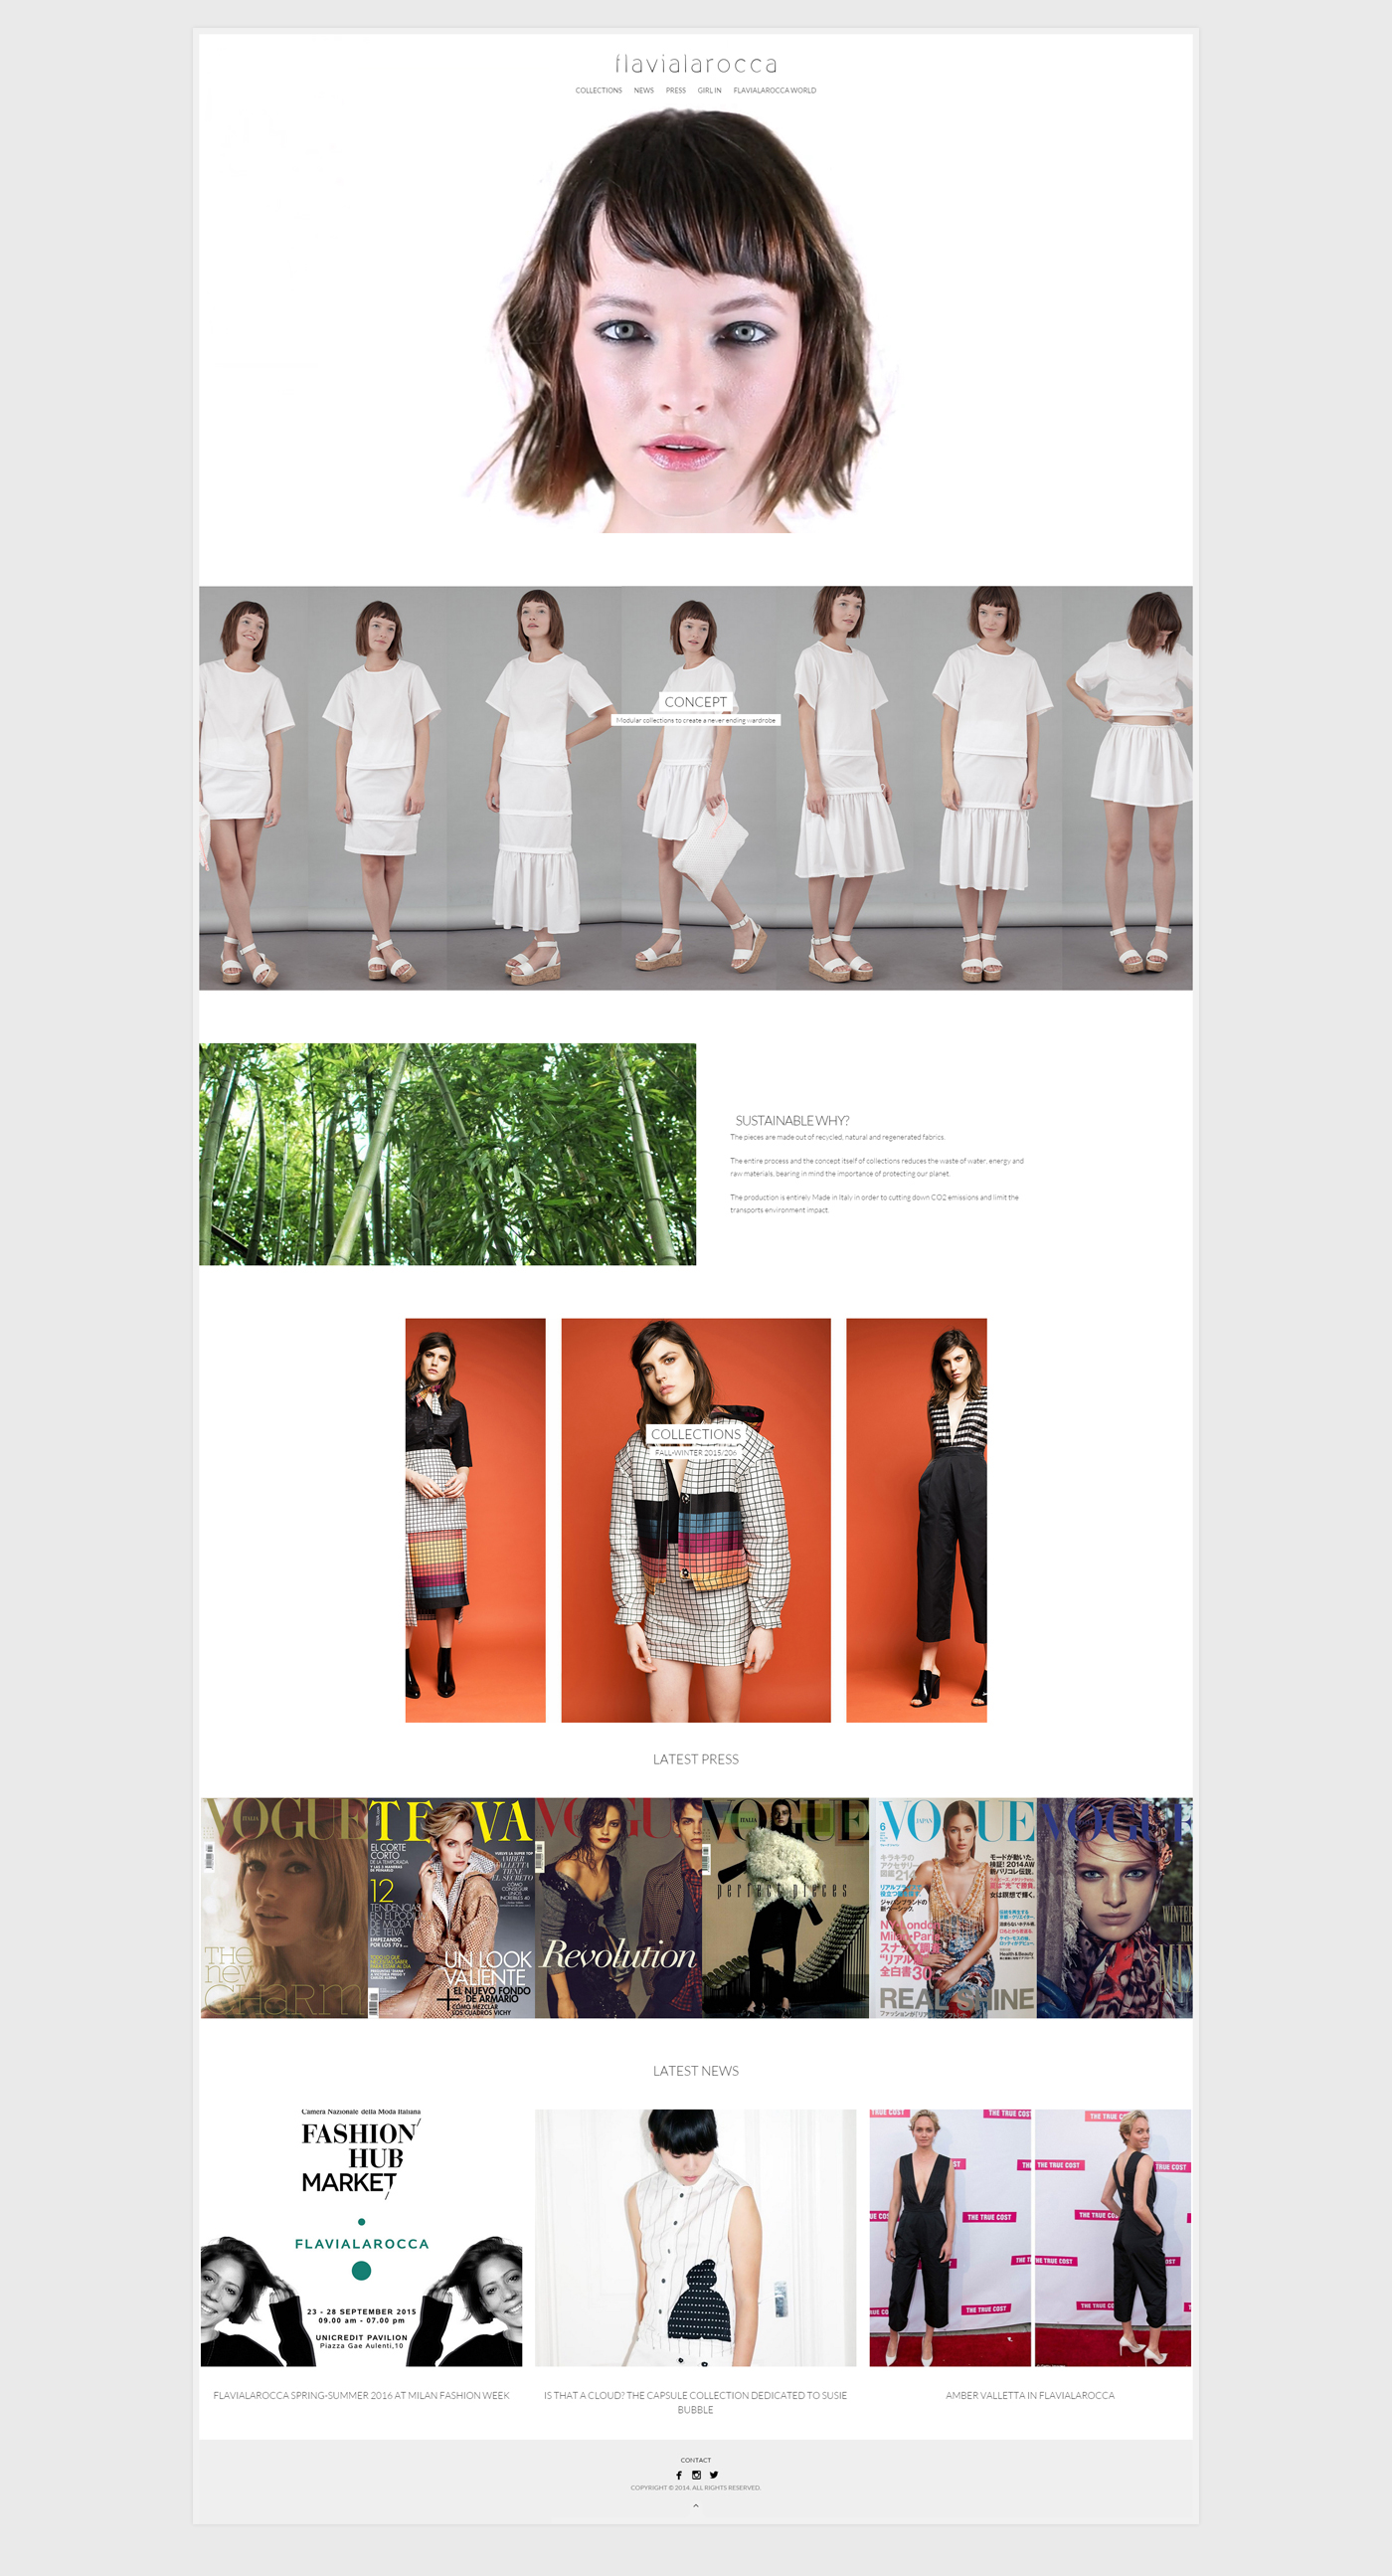 Flavia La Rocca collections designer brand models clothes lifestyle minimal concept